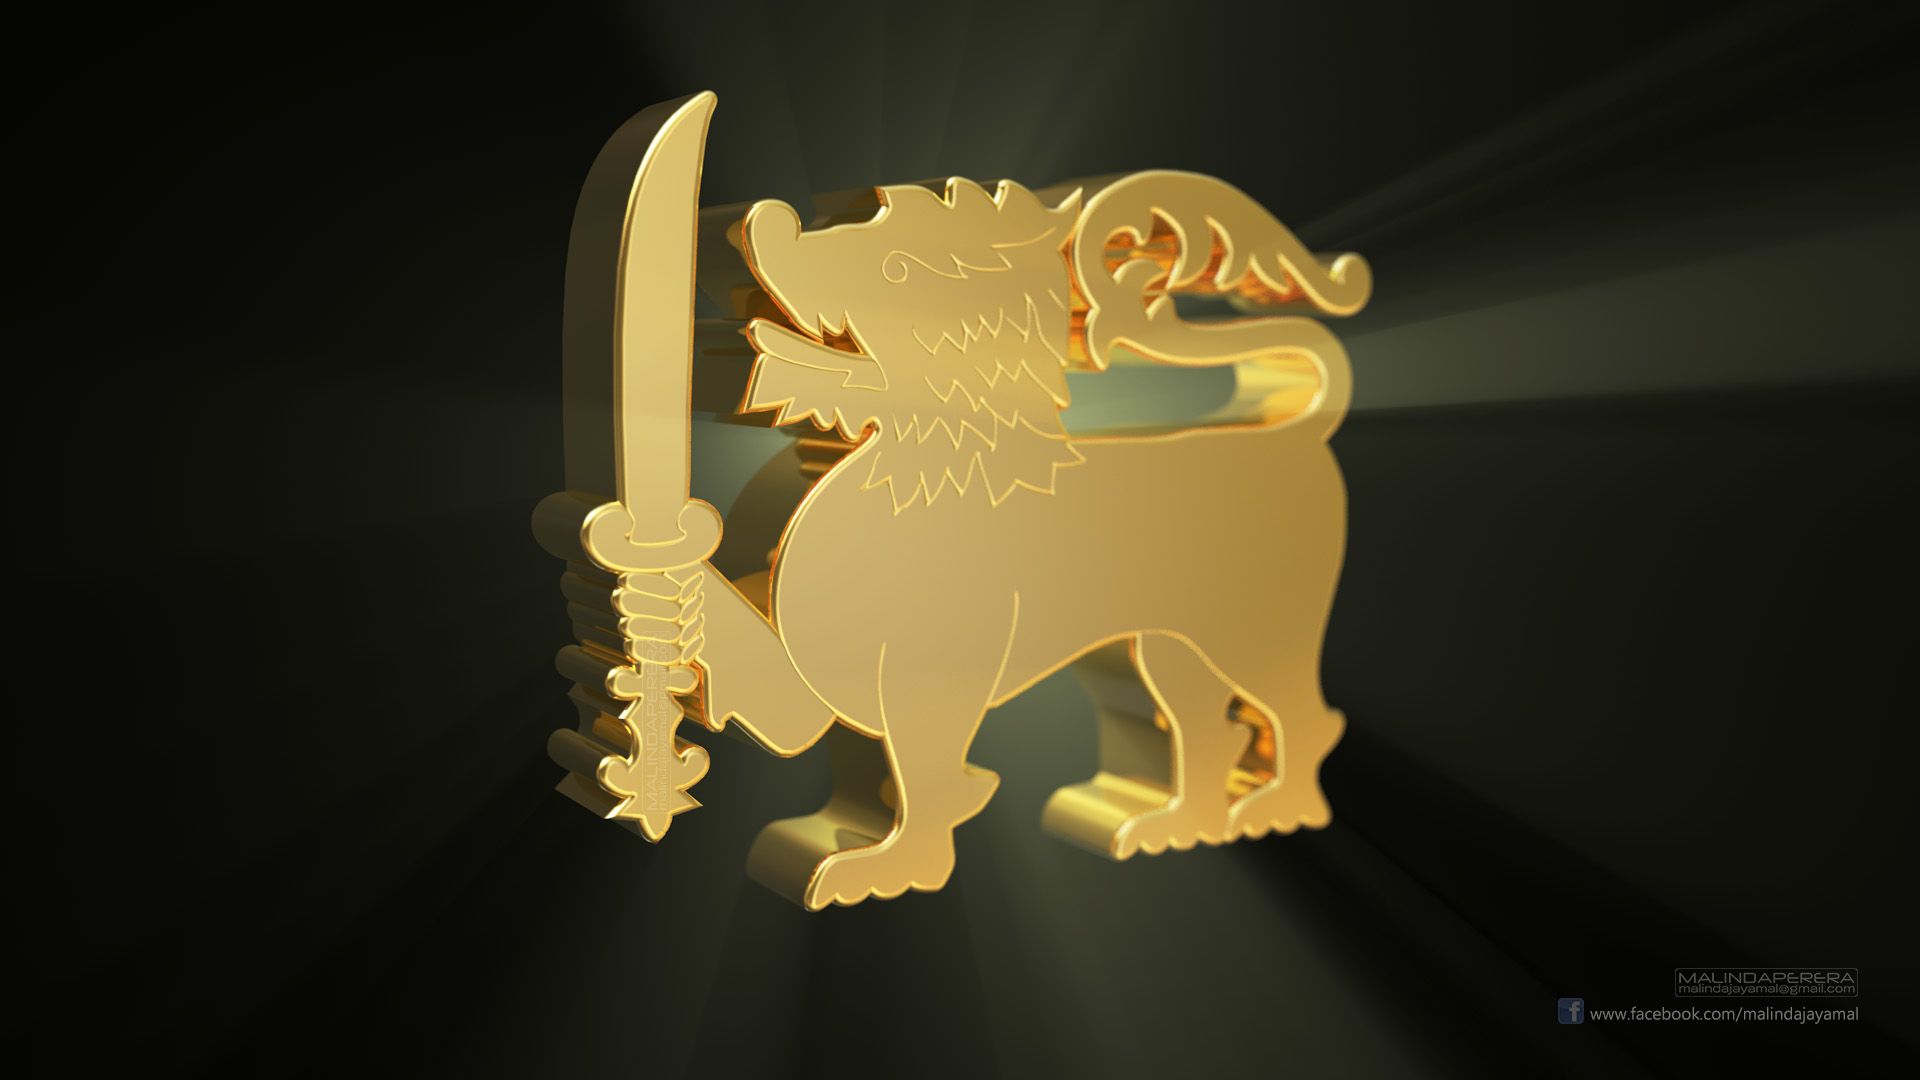 Sri Lanka - Golden Lion HD Wallpaper 1080 by Malindaperera on ...